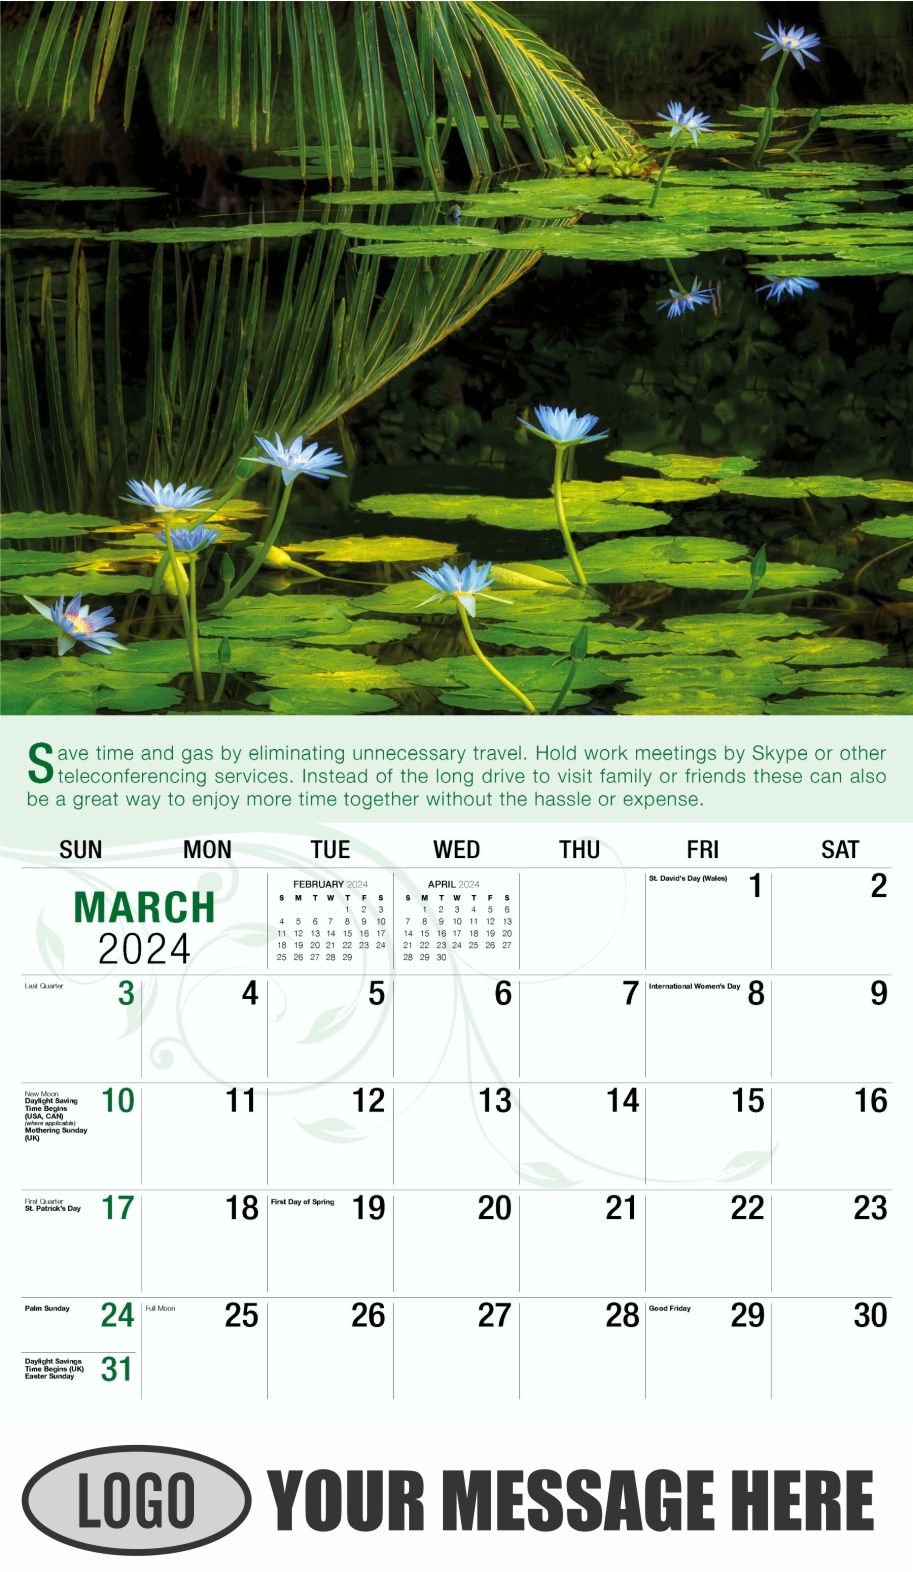 Go Green 2024 Business Promotion Calendar - March